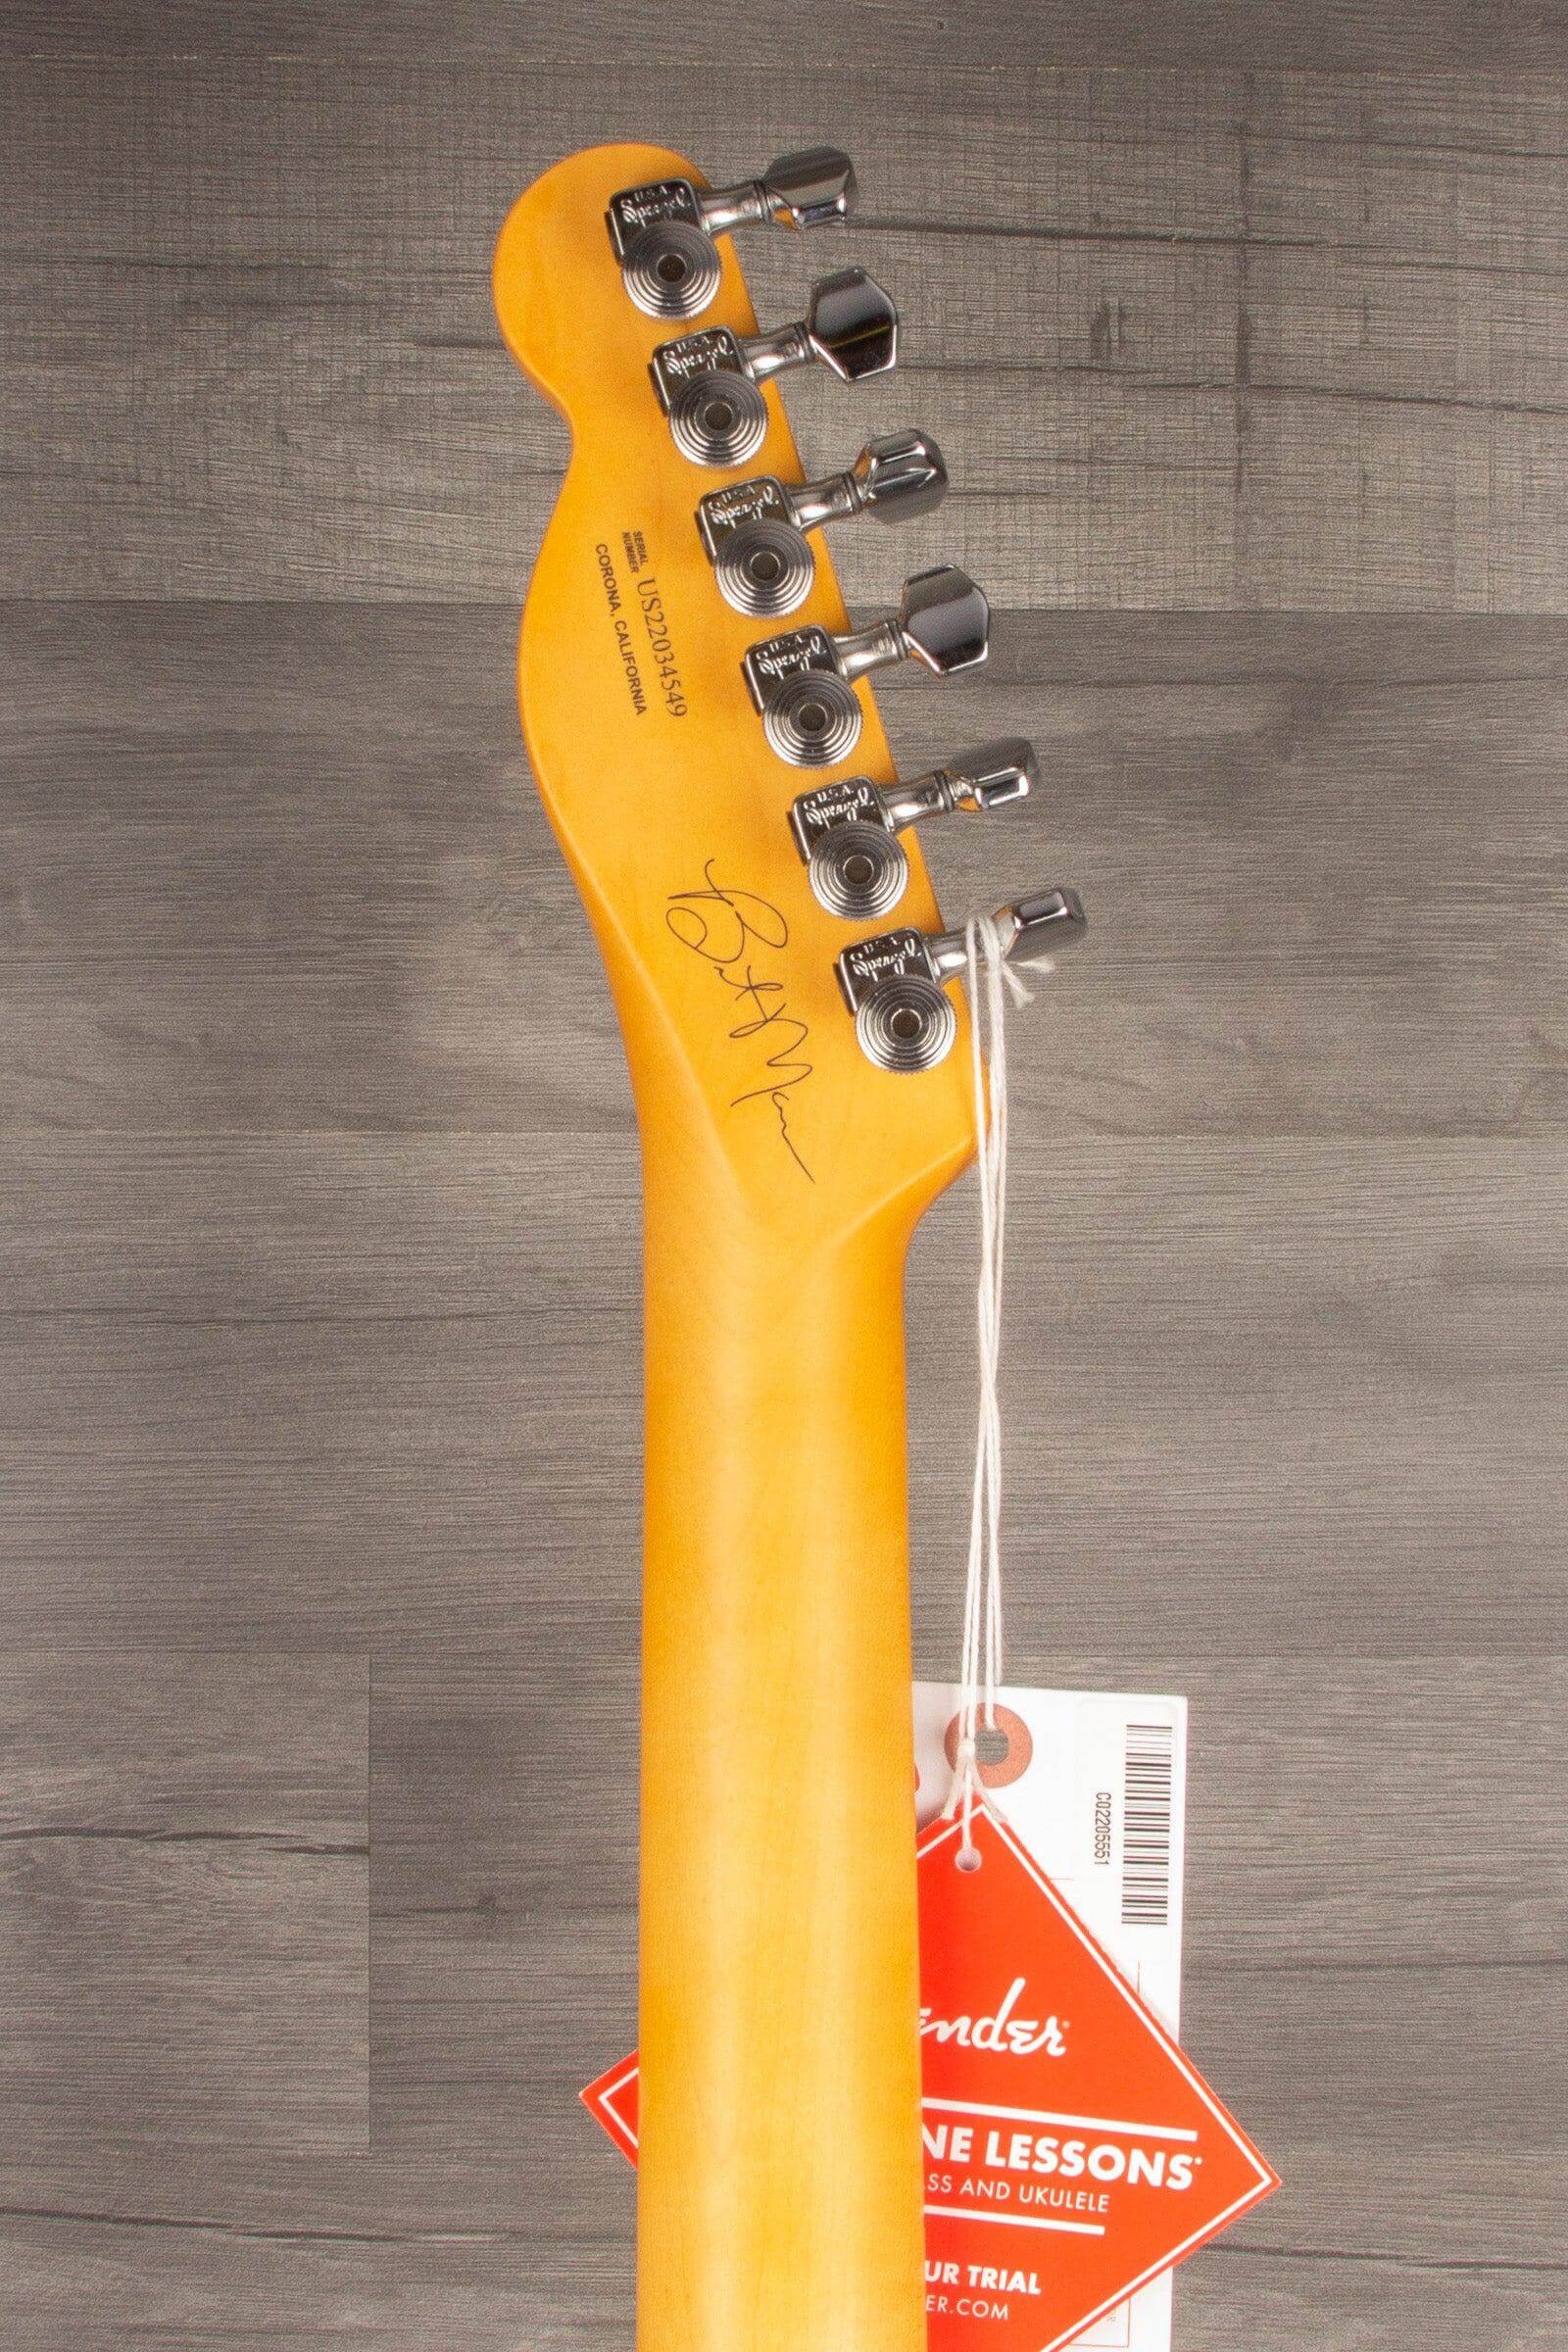 Fender Brent Mason Signature Telecaster - Primer Grey - MusicStreet